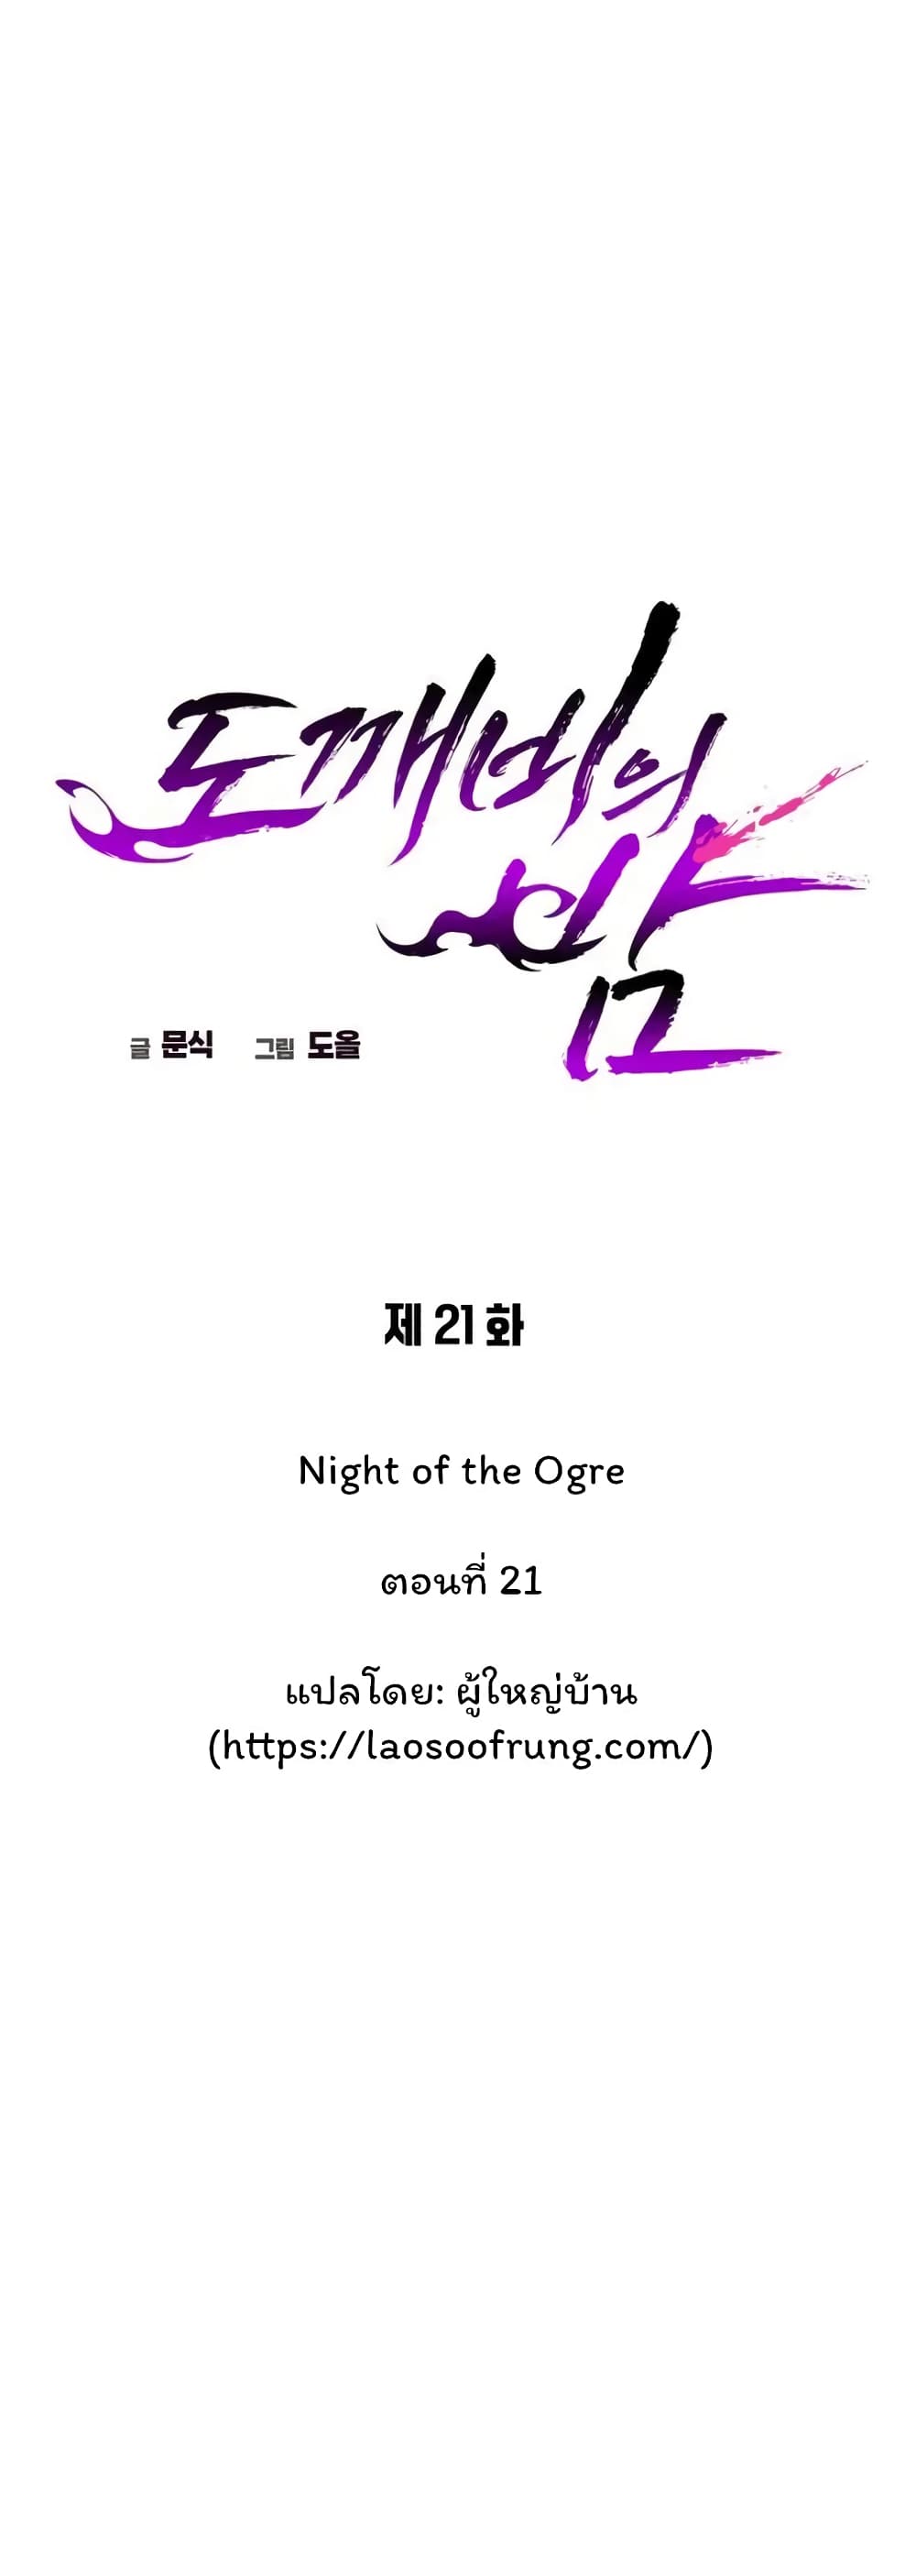 Night of the Ogre 21-21